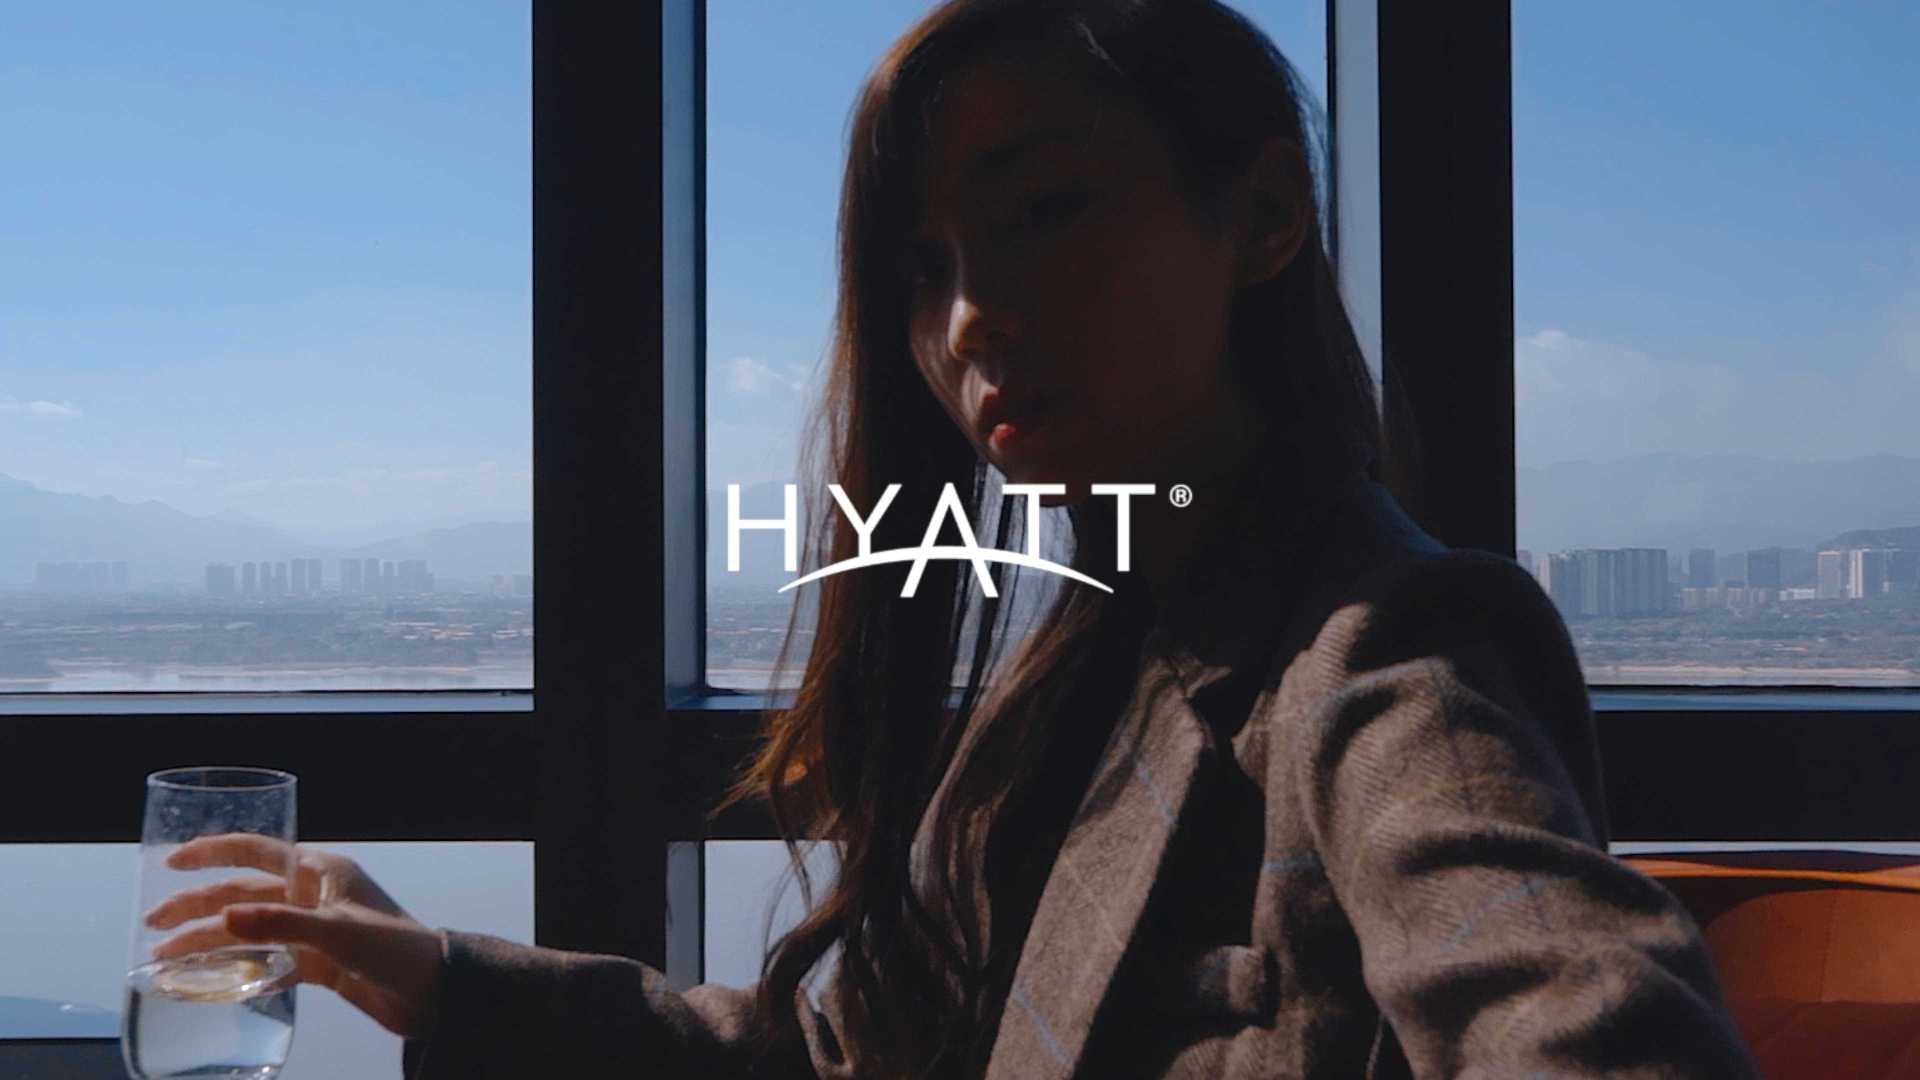 HYATT 福州仓山凯悦酒店 - Let's enjoy it.